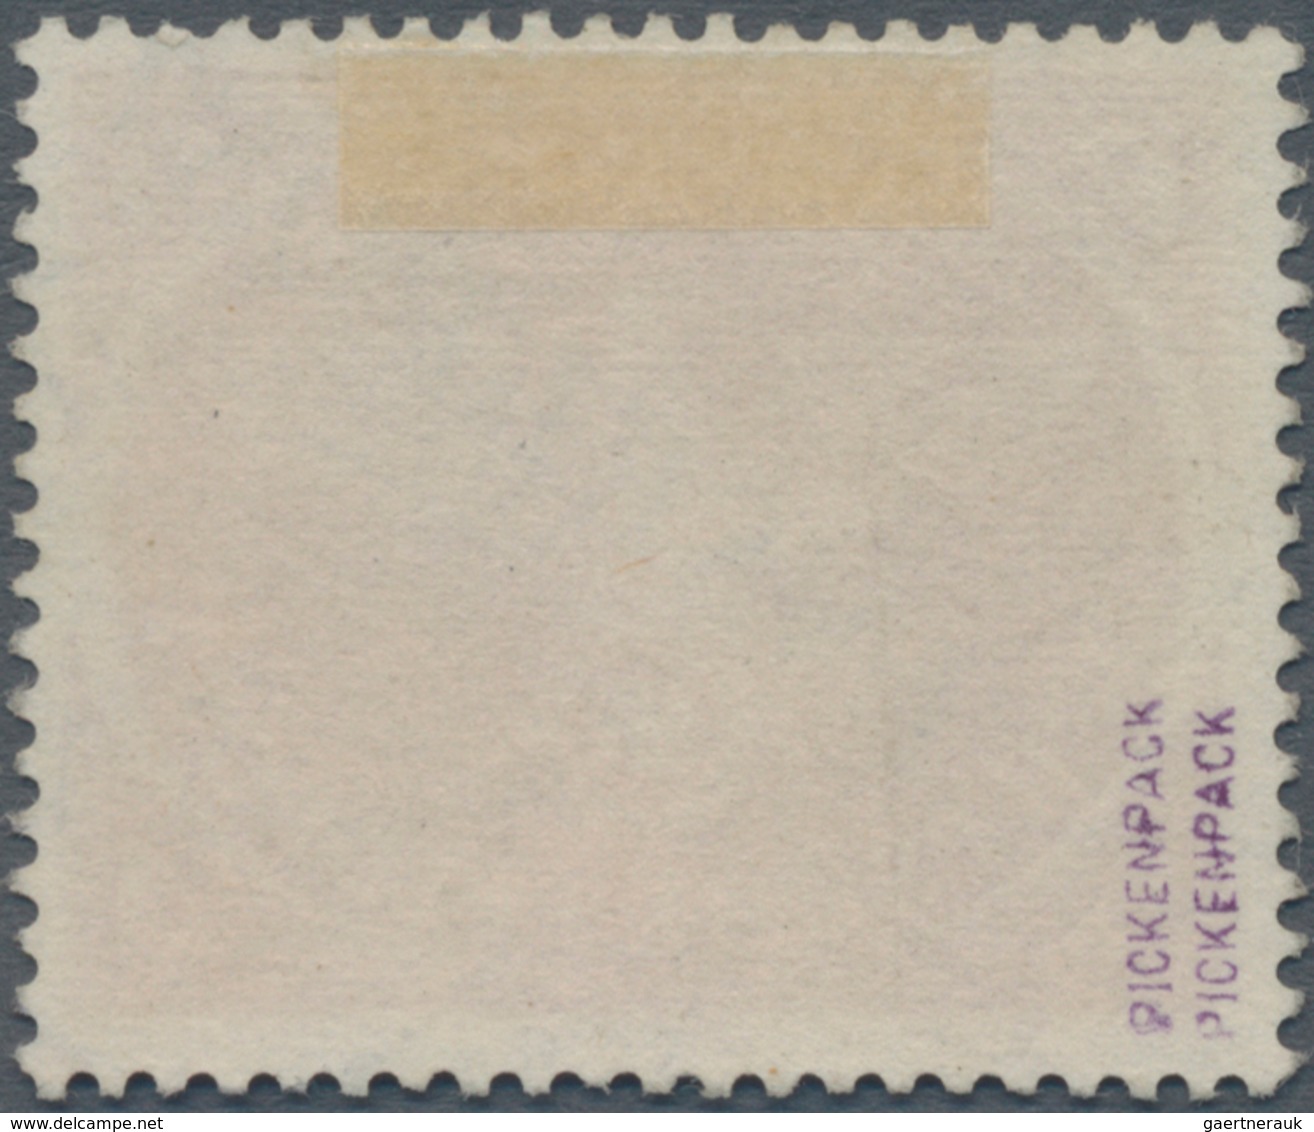 Feldpostmarken: 1944, Insel Rhodos, Inselpost-Zulassungsmarke Mit Diagonalem Schwarzblauen Agramer A - Andere & Zonder Classificatie